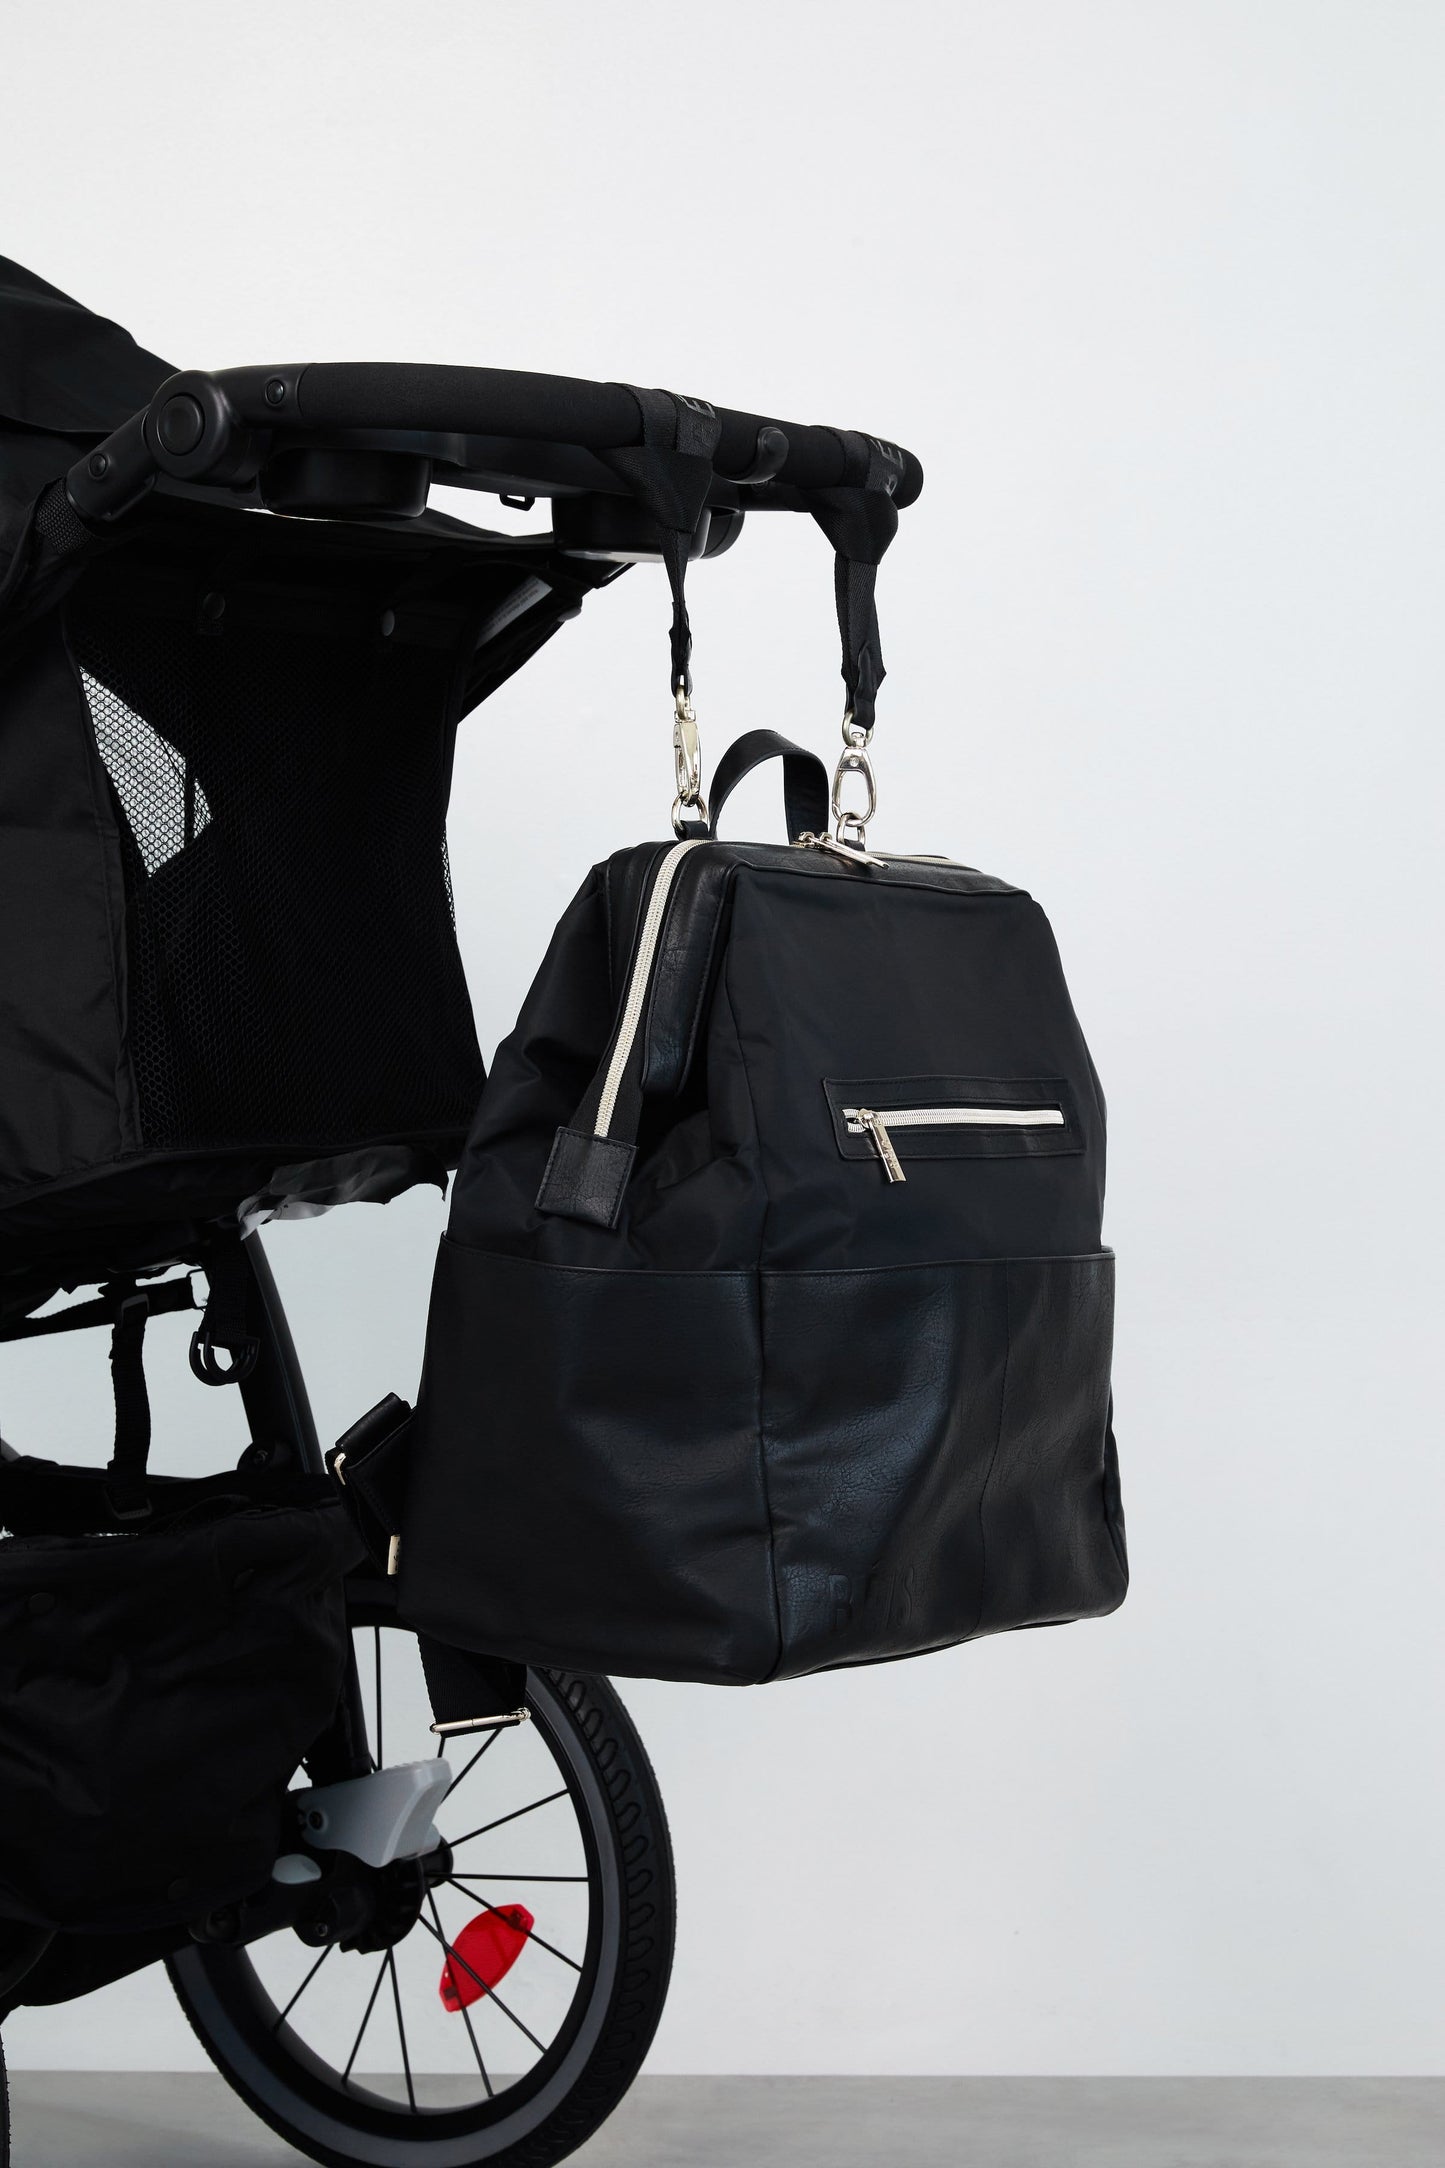 The Diaper Bag Backpack in black handing on a black stroller